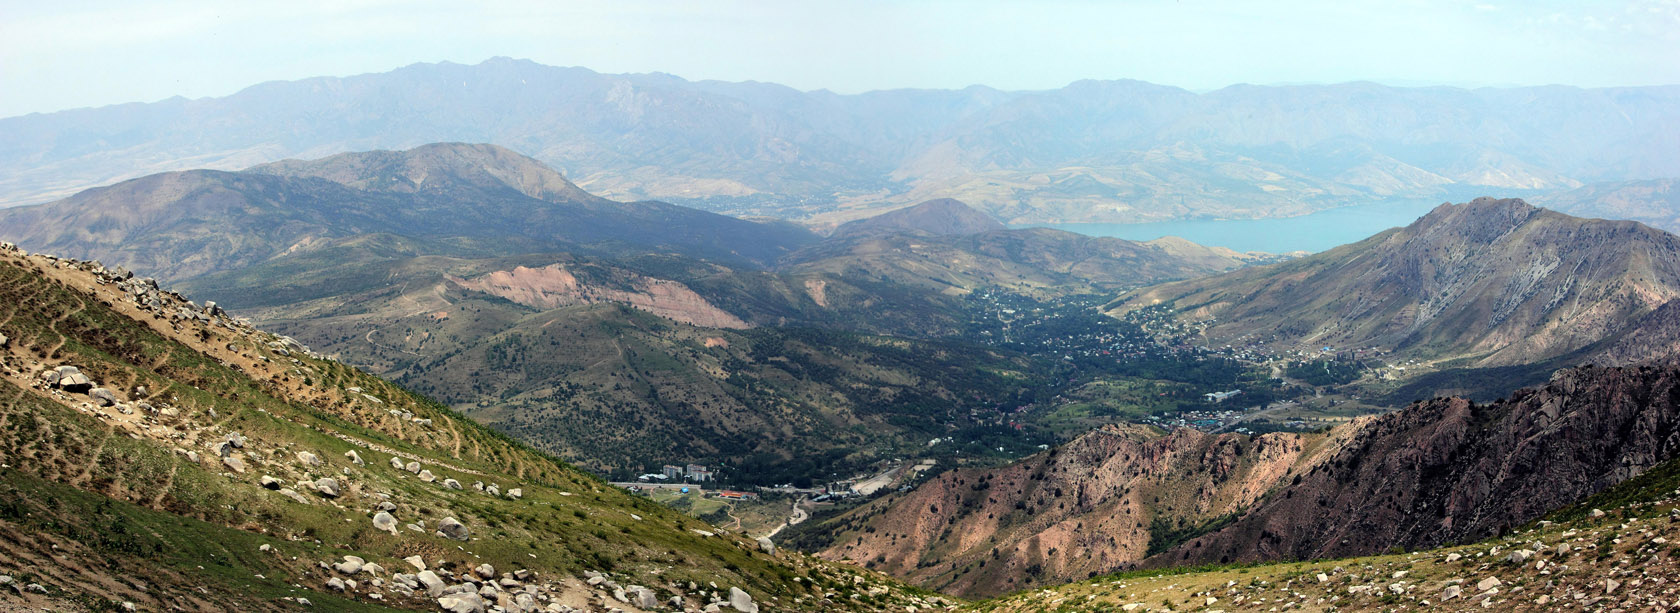 Западный гребень Бол. Чимгана, изображение ландшафта.